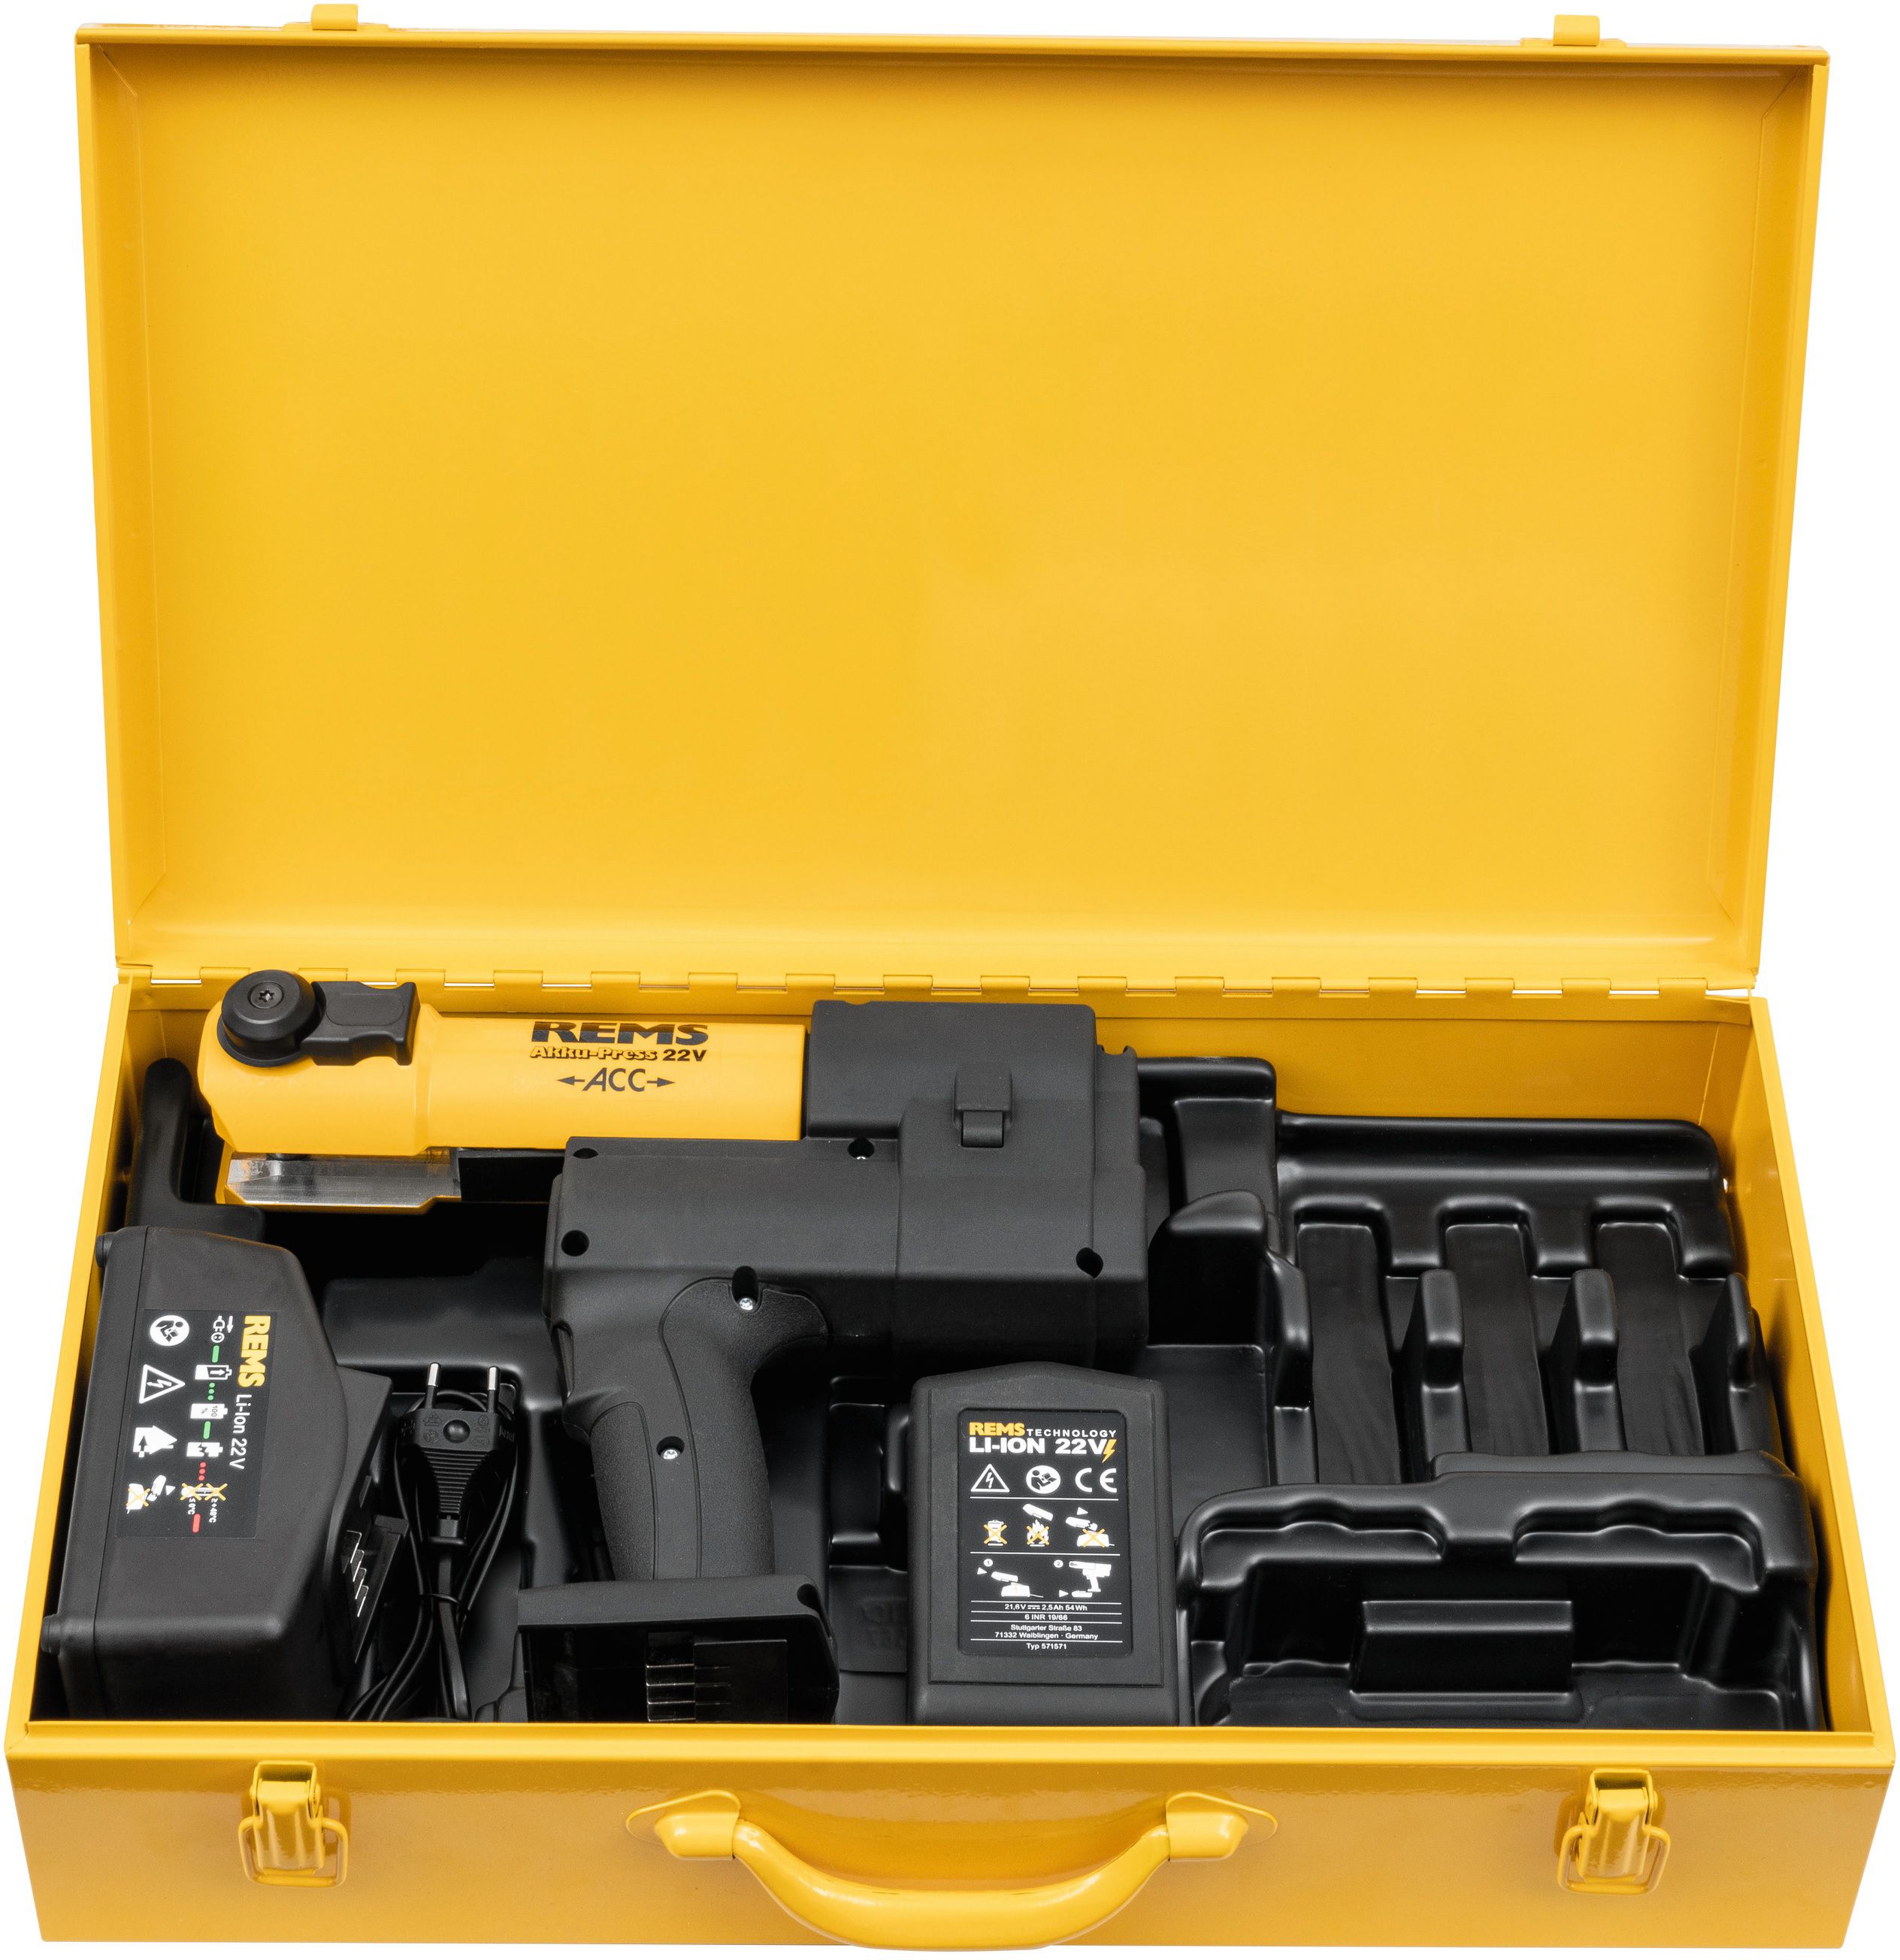 REMS Akku-Press 22 V ACC Basic-Pack, Blechkasten 22V, 1 x  2.5Ah, bis Ø 110mm, drehbar, 576010 R220 - Sanitärwerkzeuge